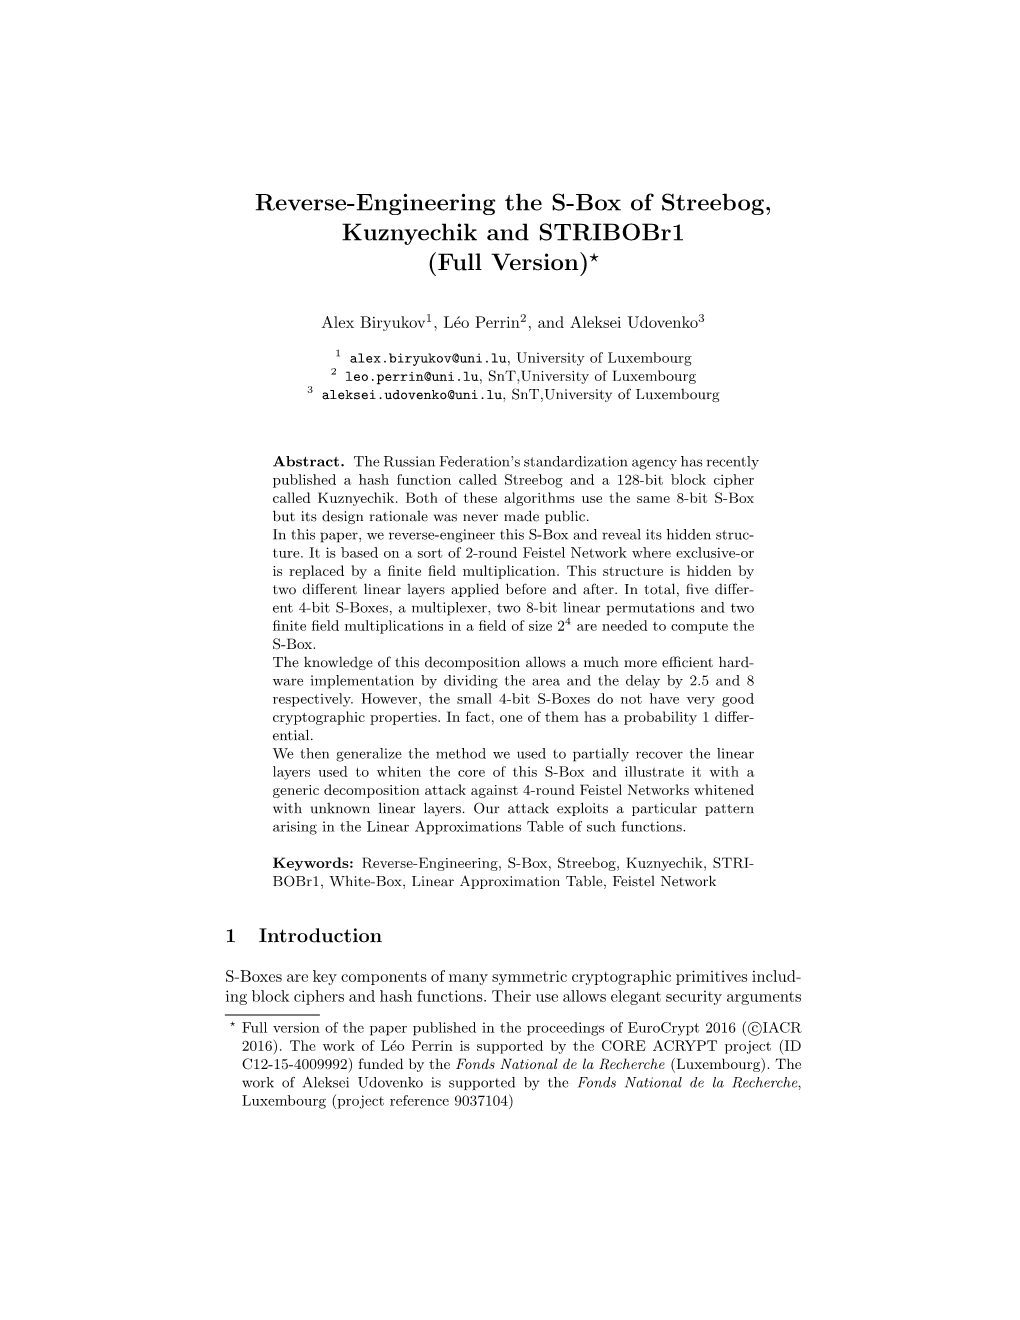 Reverse-Engineering the S-Box of Streebog, Kuznyechik and Stribobr1 (Full Version)⋆